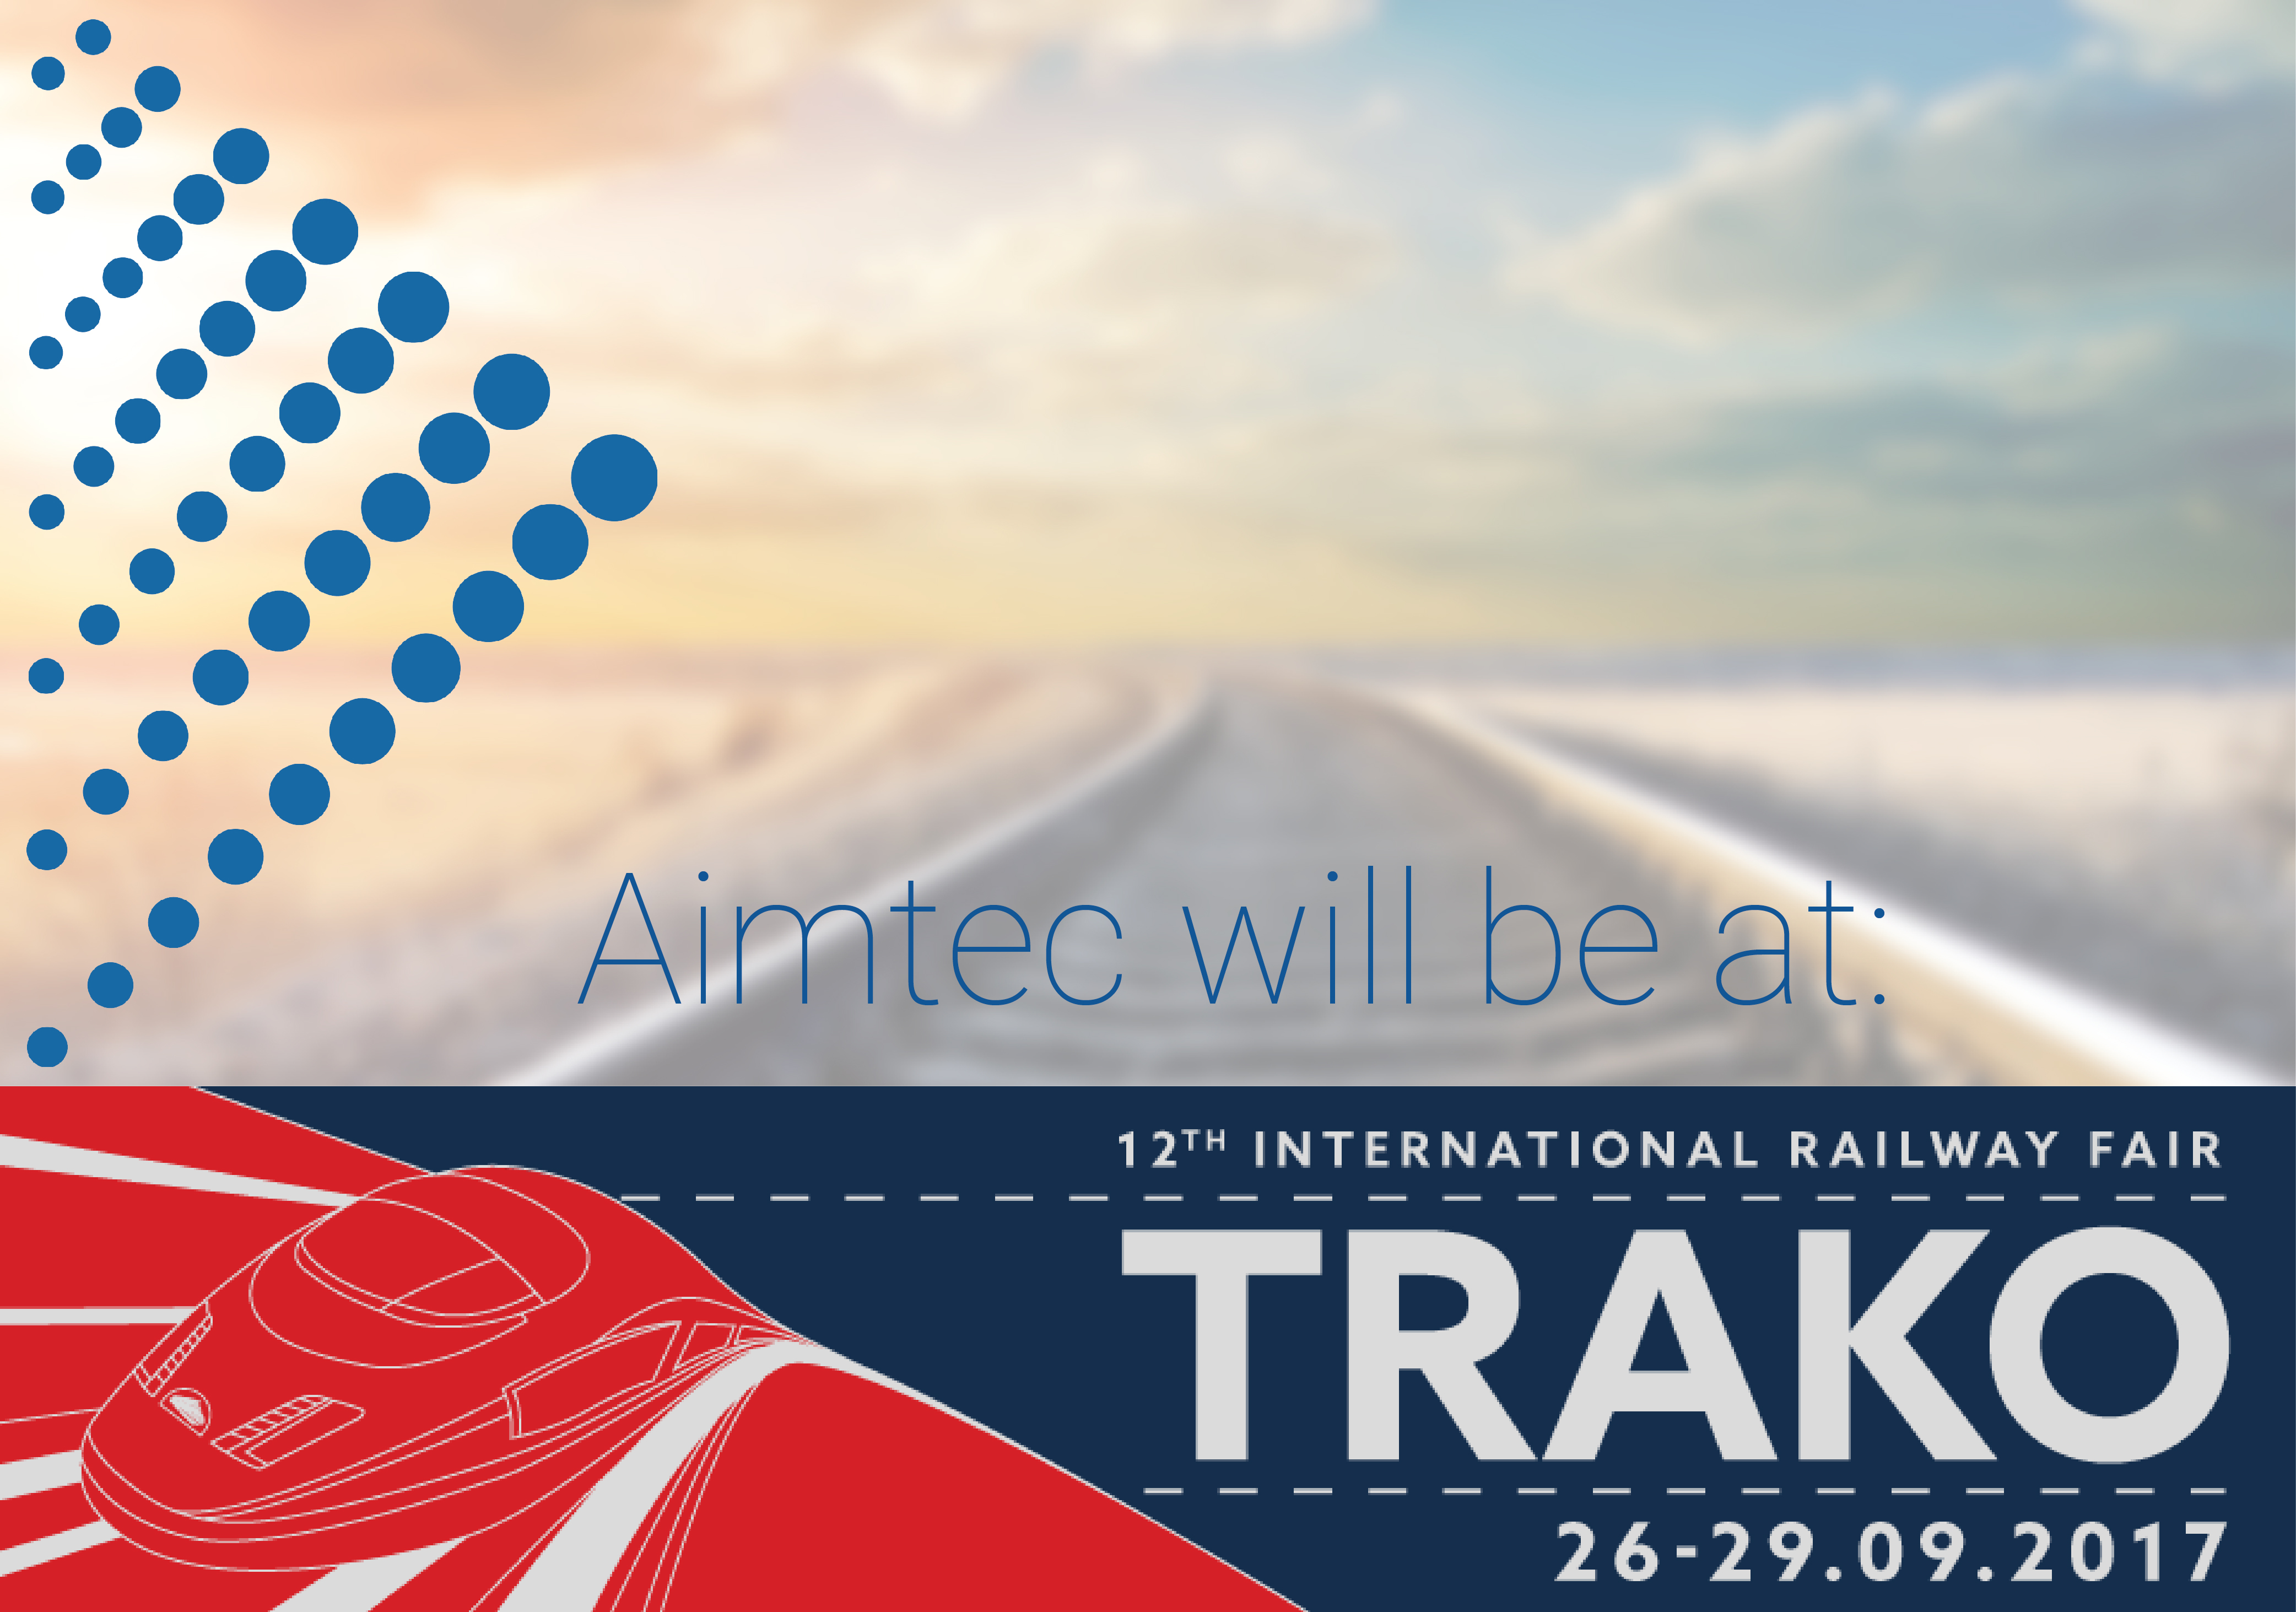 Aimtec will be at TRAKO railway fair